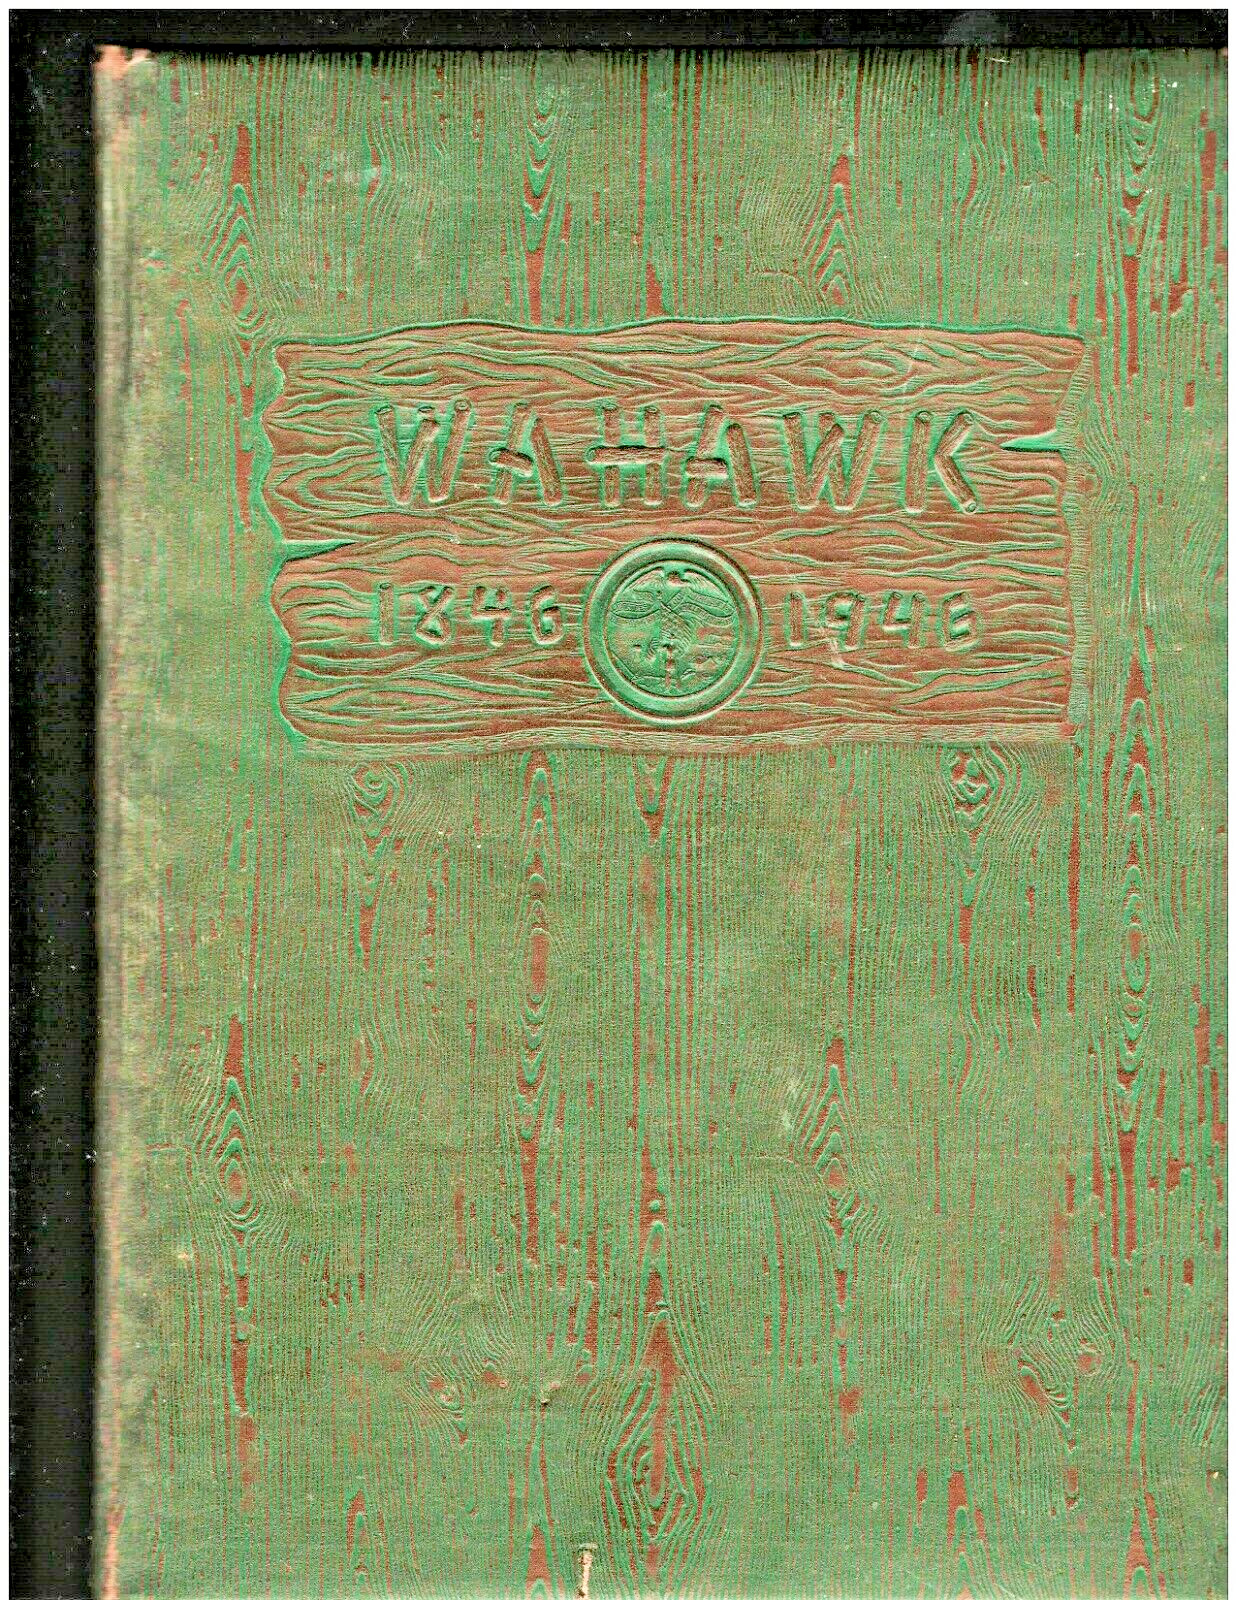 1946 West Hill High School Yearbook, Wahawk, Waterloo, Iowa